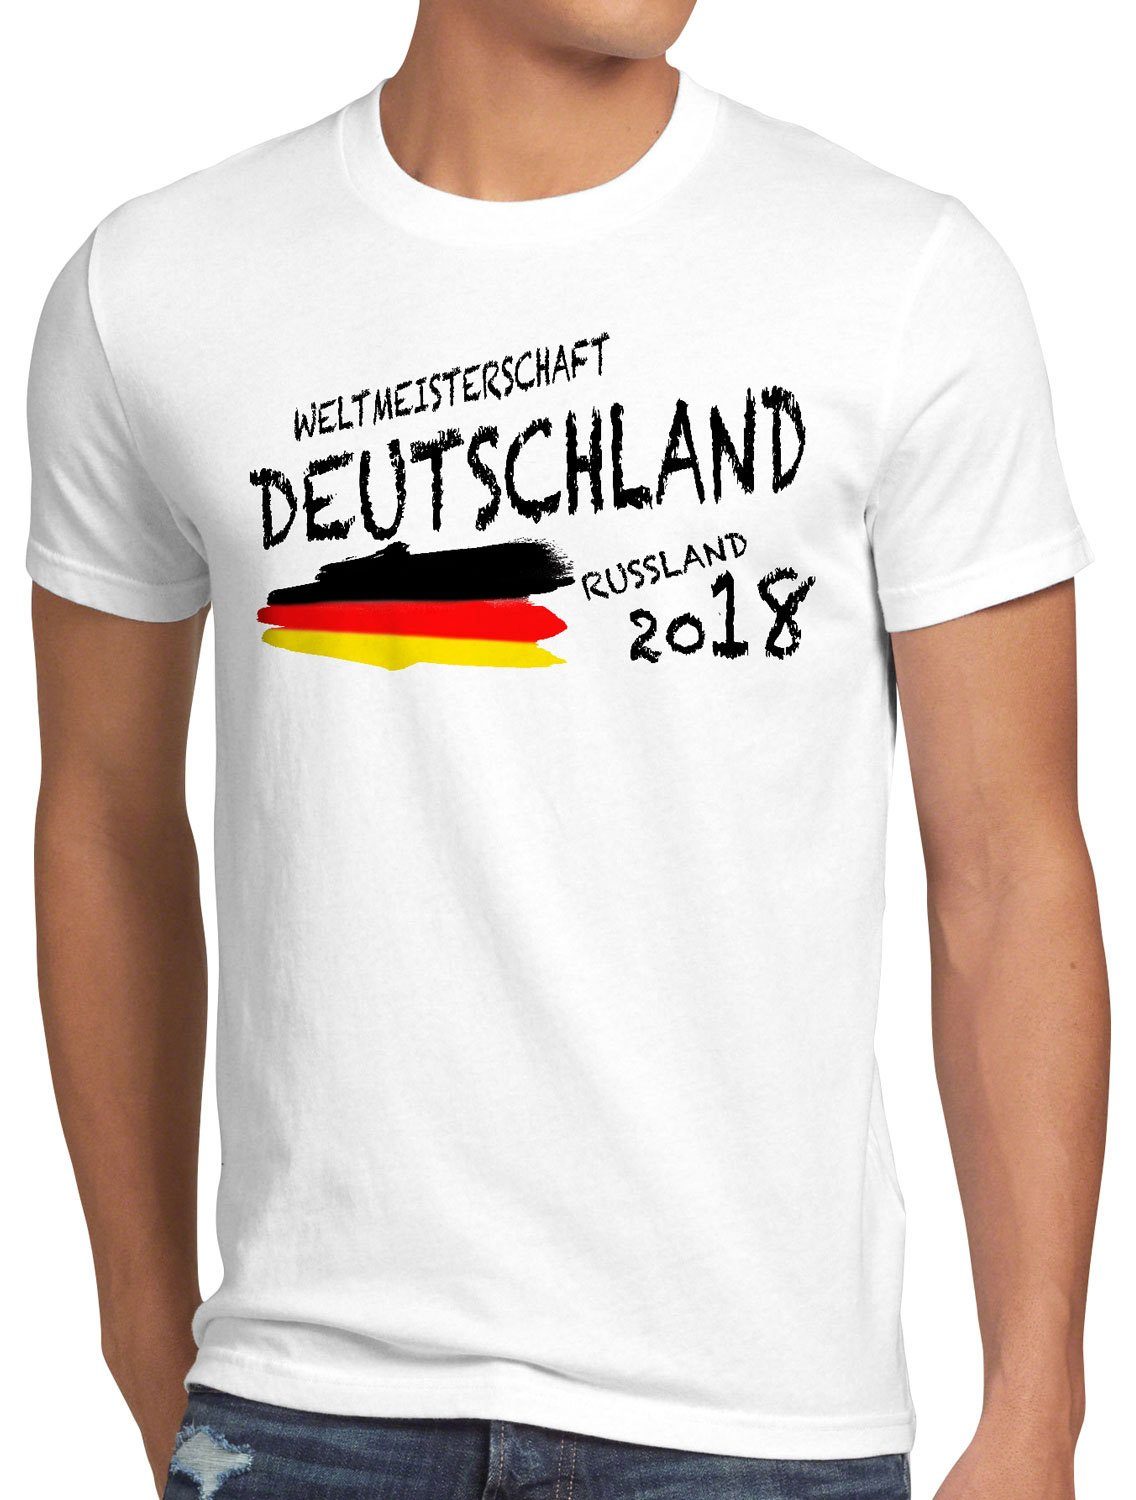 weiß Herren EM WM Trikot Print-Shirt T-Shirt Fussball style3 Europameisterschaft Fanartikel Deutschland